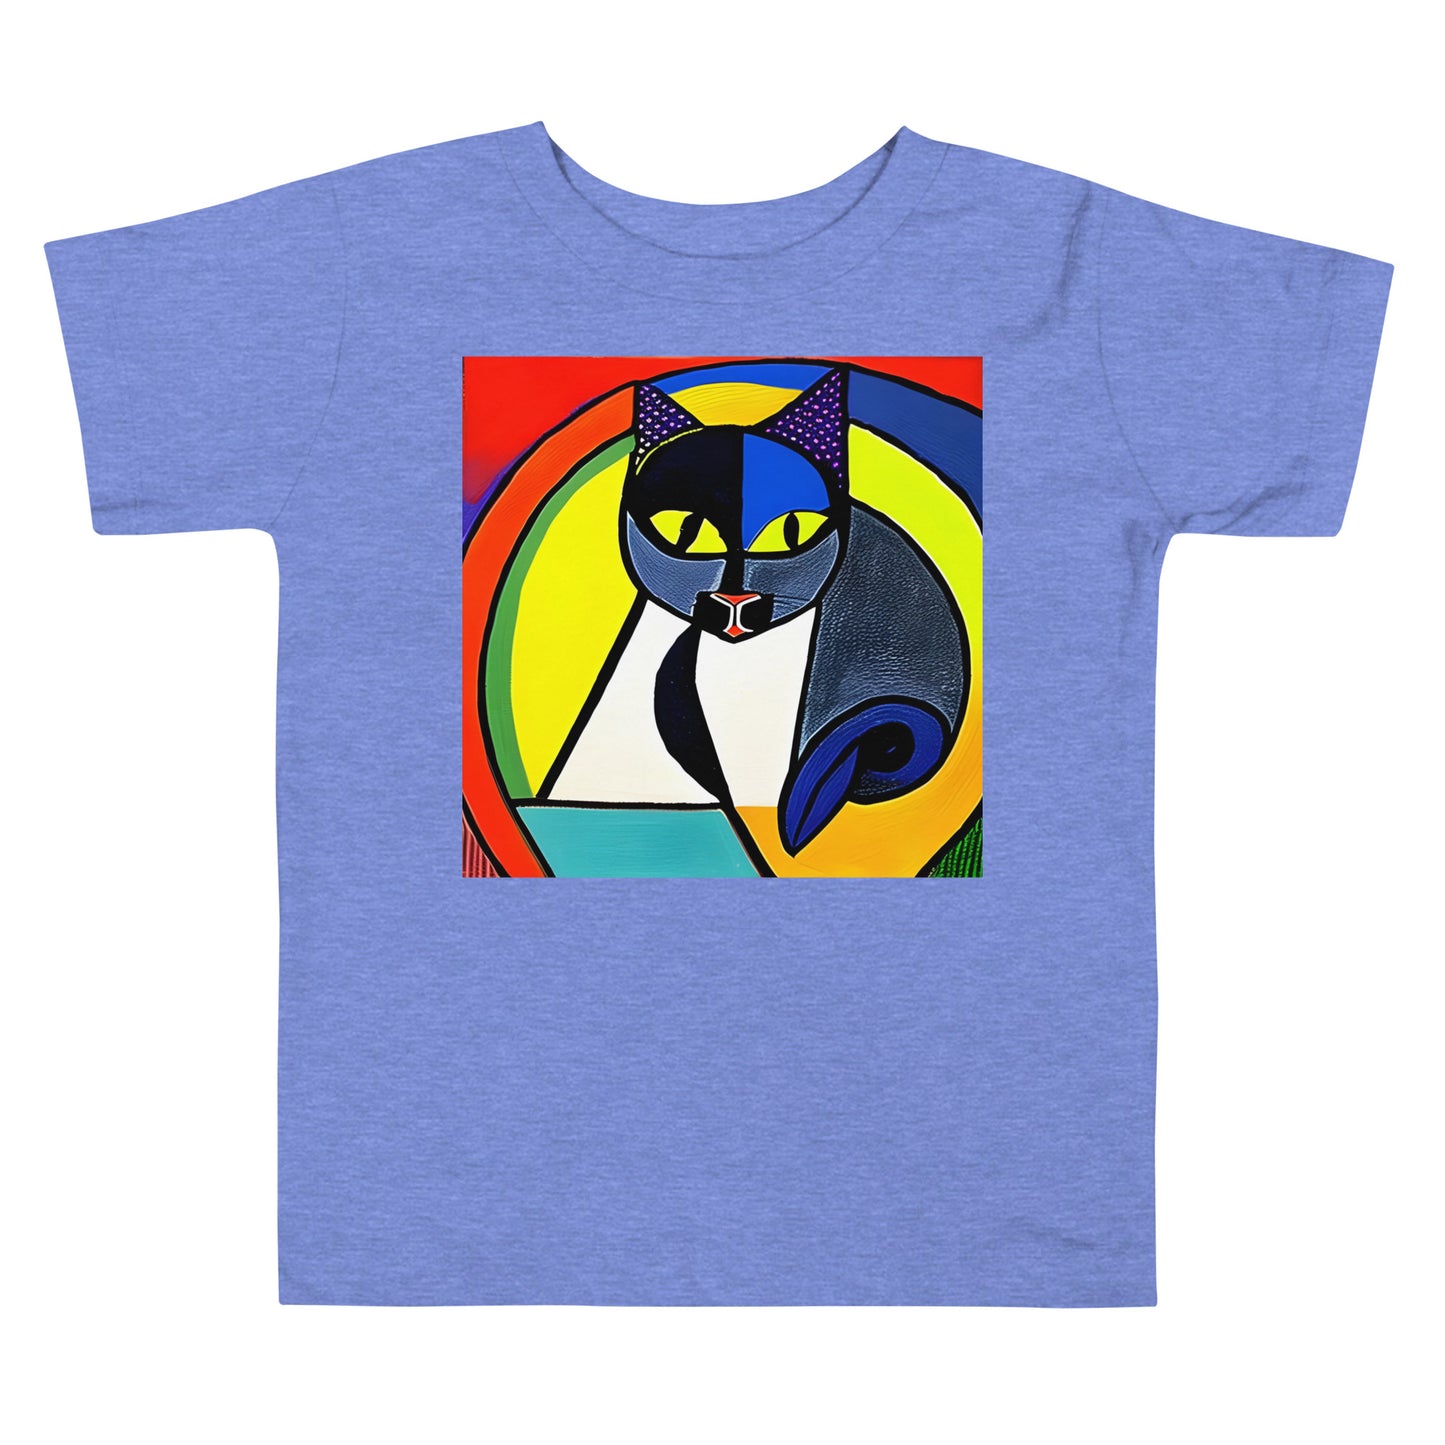 Purrfect Toddler's T-Shirt - 007